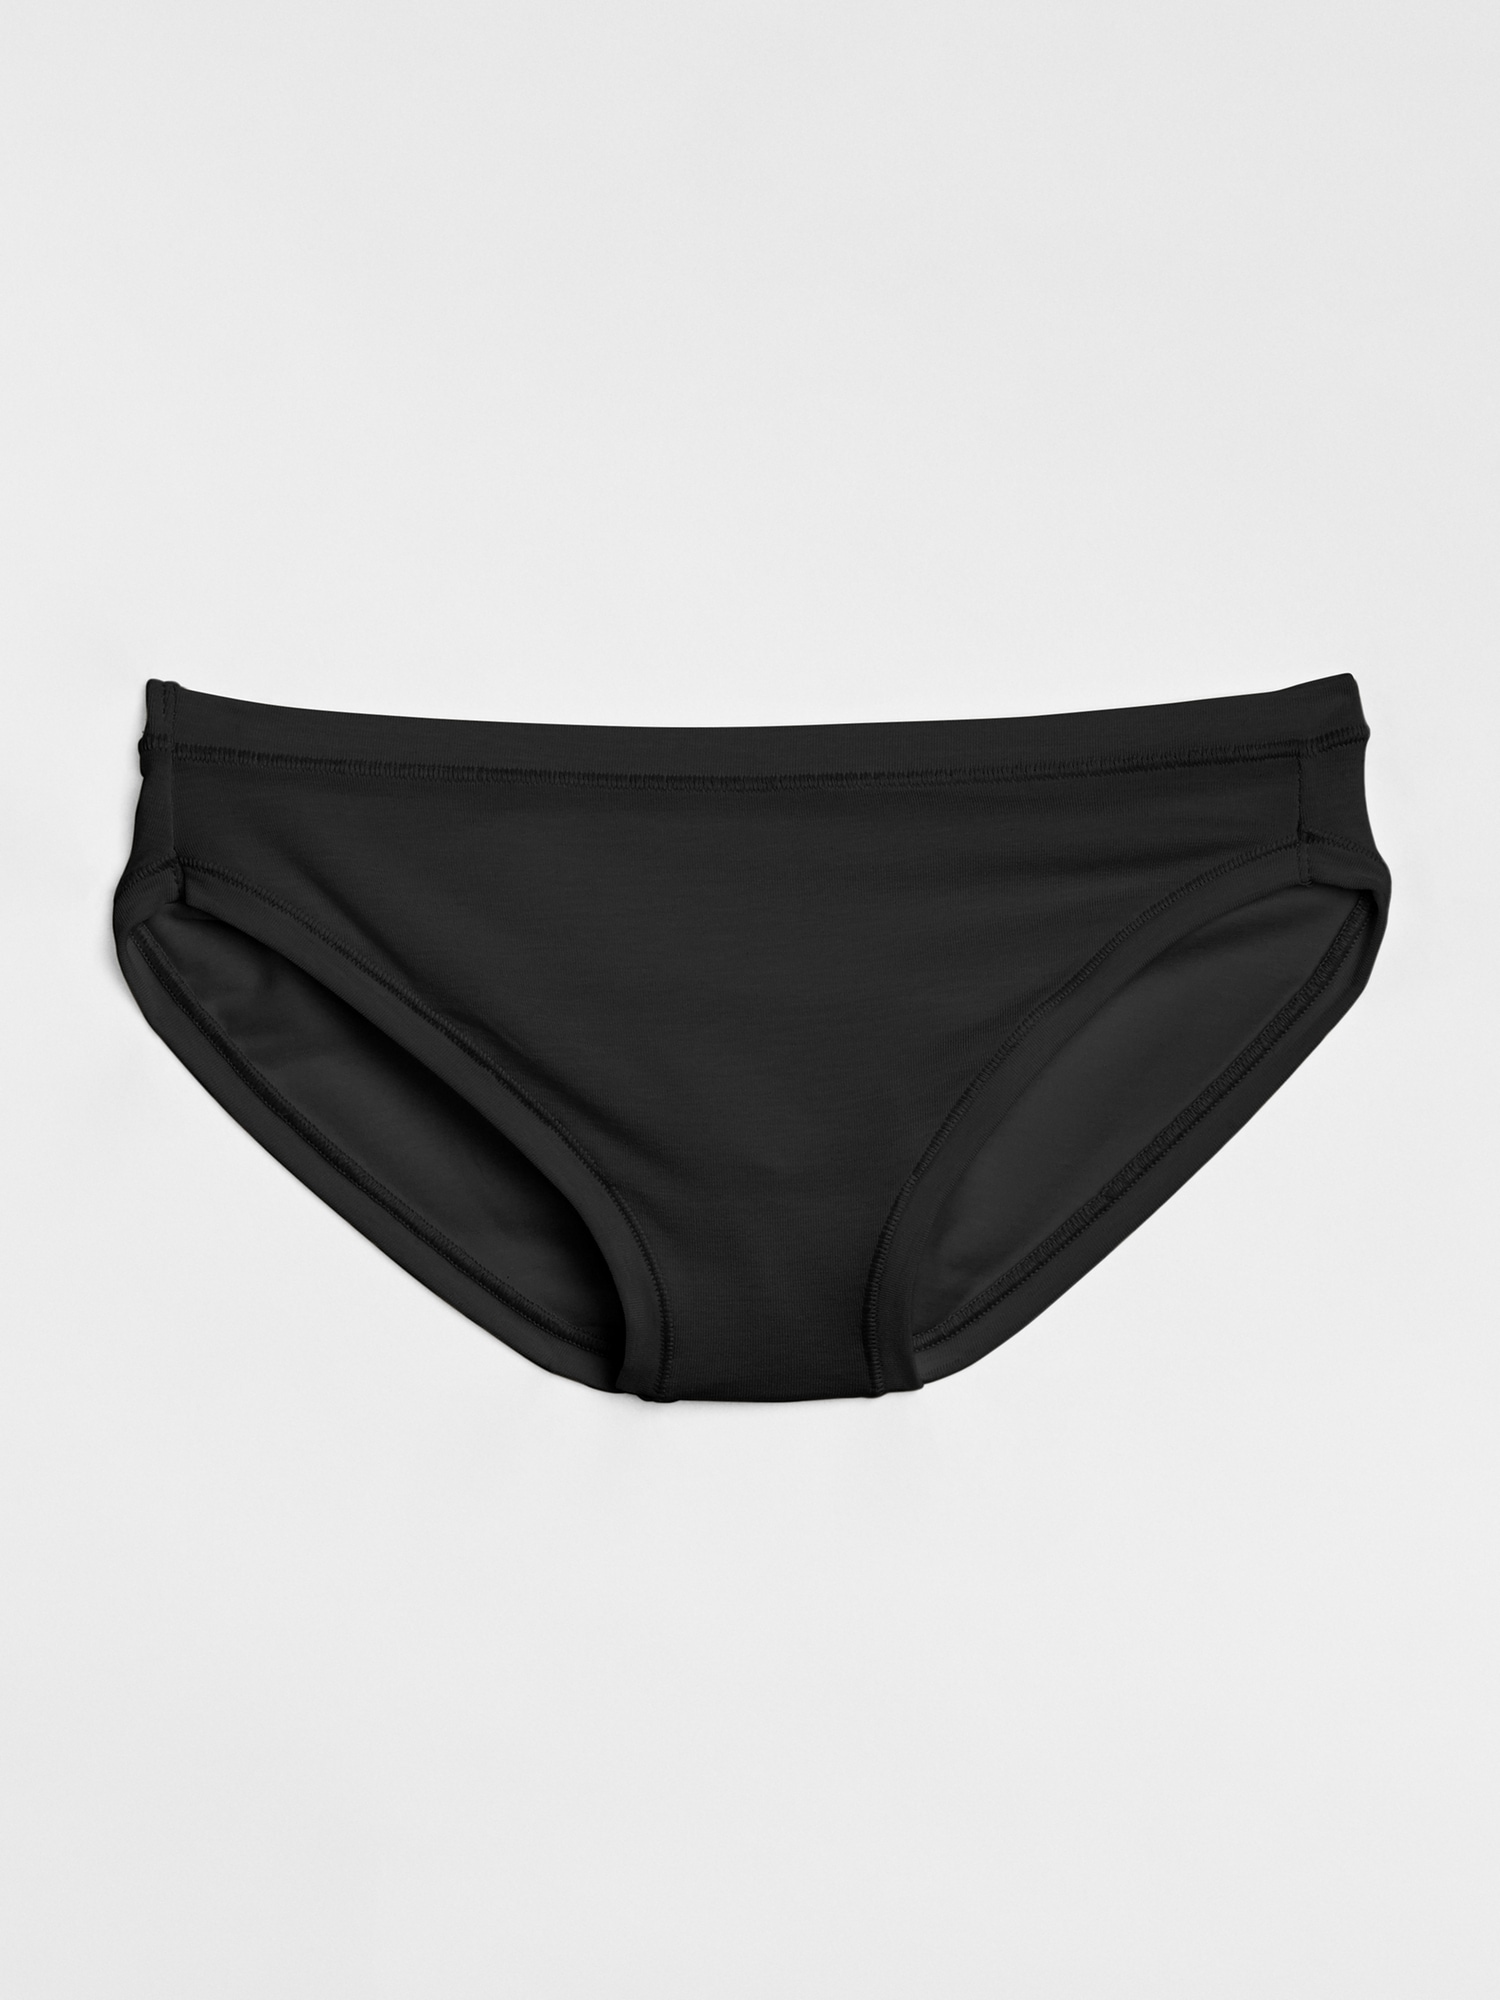 Gap Body Black Breathe Bikini Underwear 2 Pack Women’s Medium NWOT